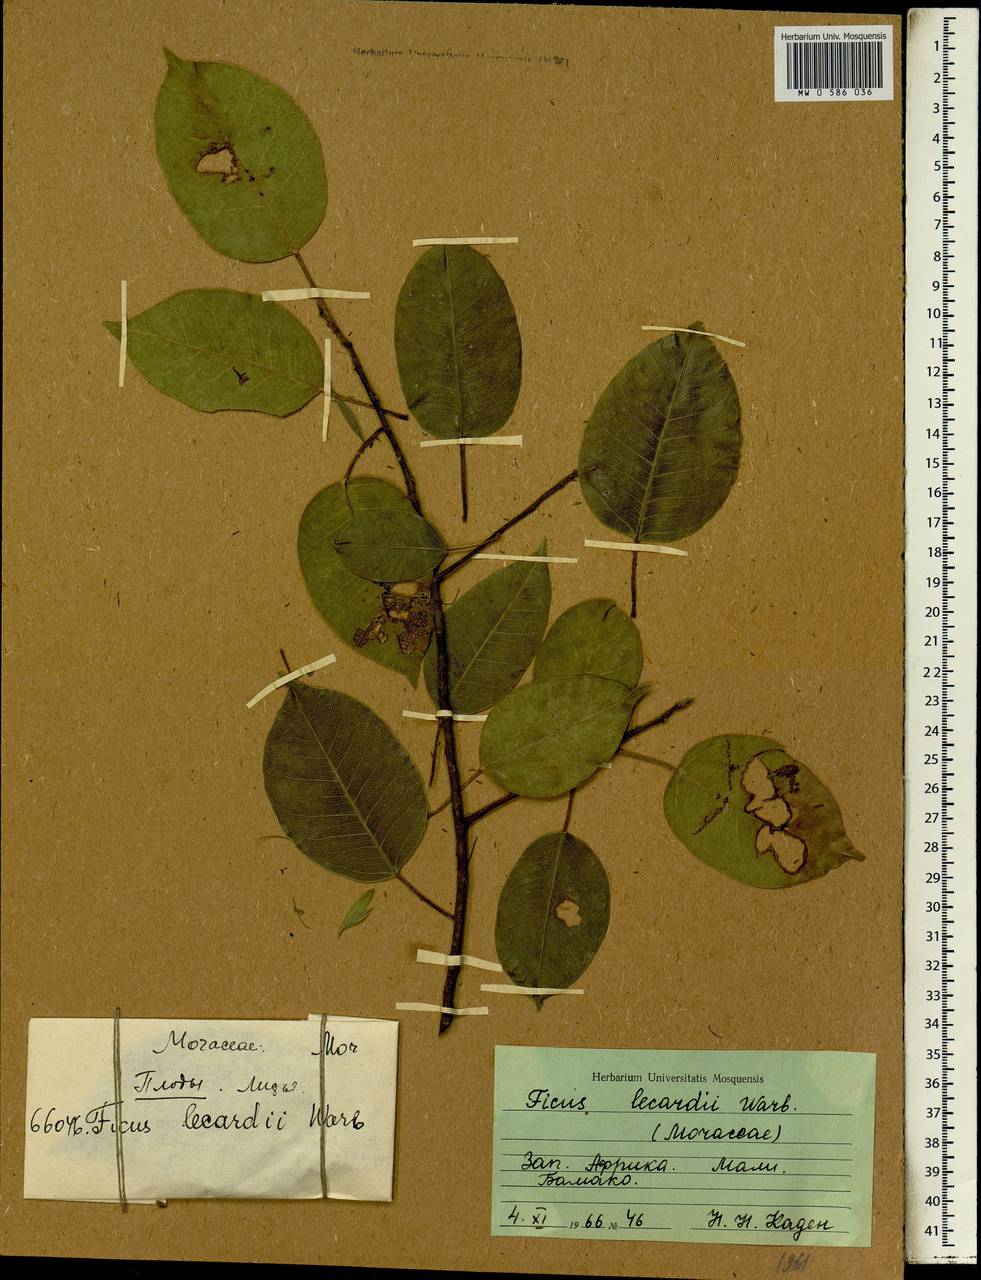 Ficus cordata subsp. lecardii (Warb.) Berg, Africa (AFR) (Mali)